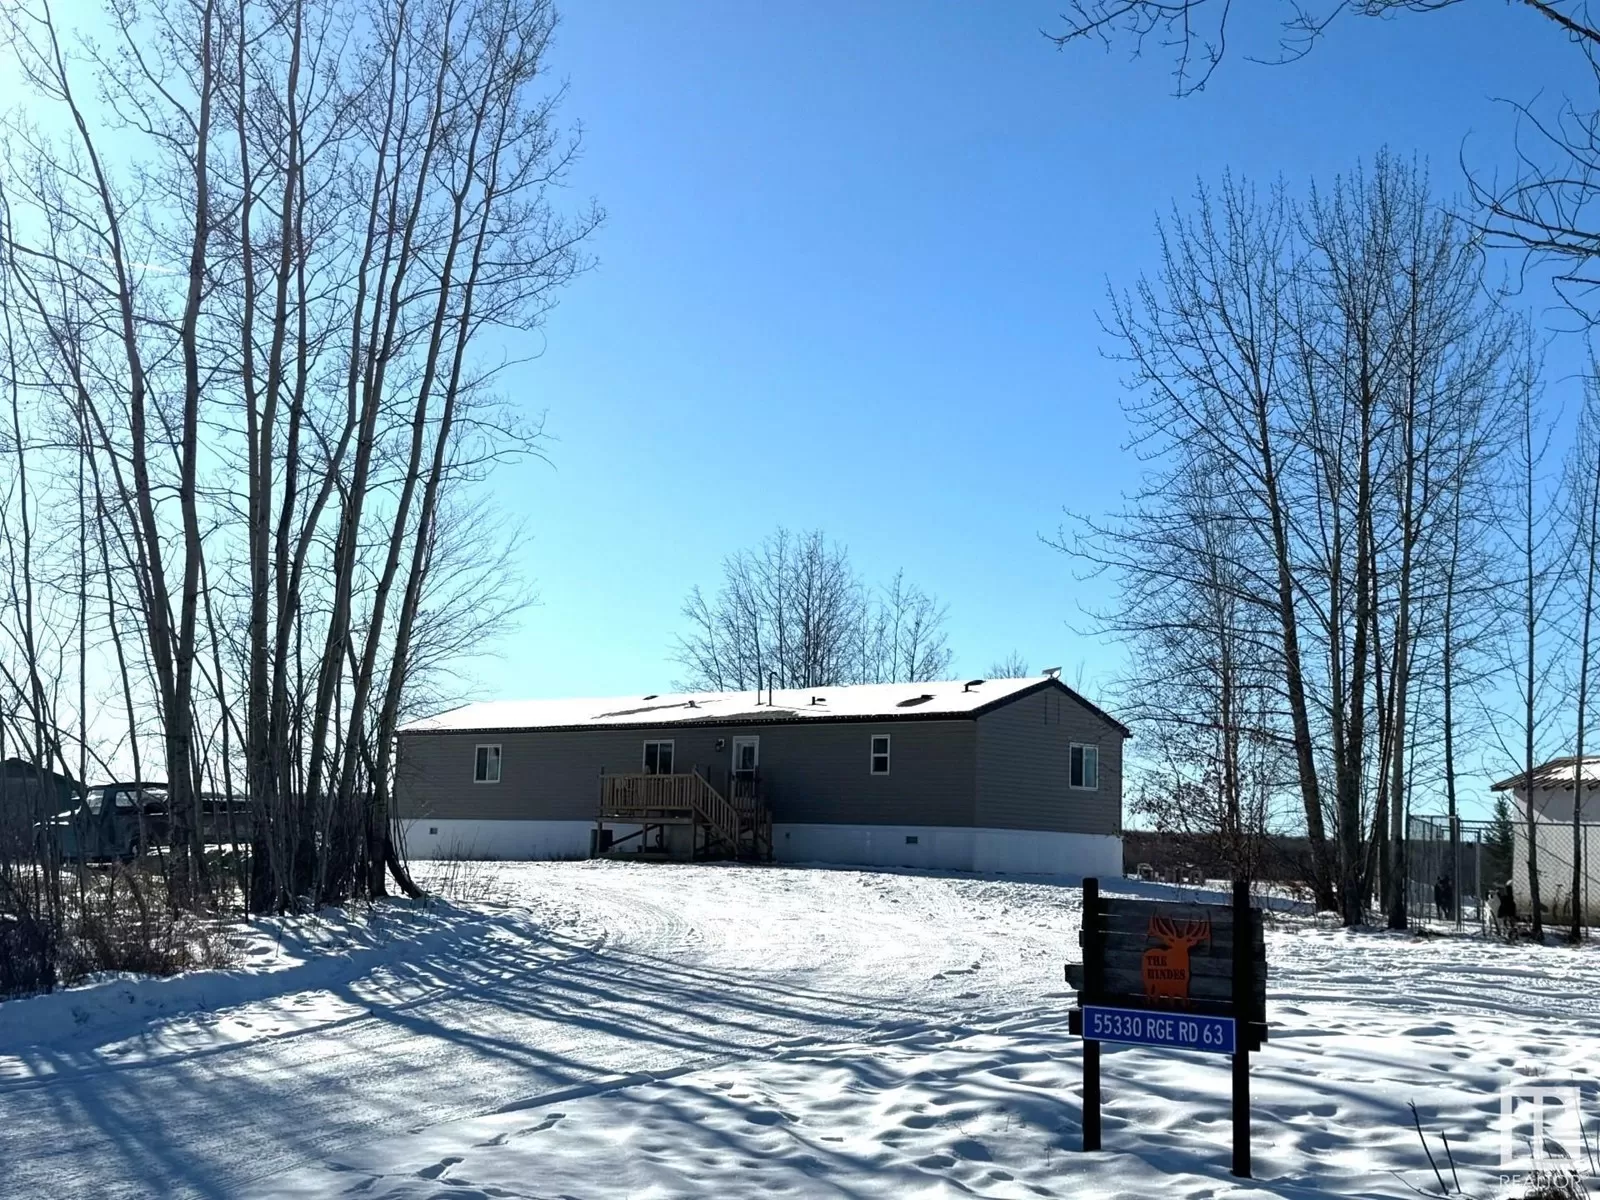 House for rent: 55330 Rrd 63, Rural Lac Ste. Anne County, Alberta T0E 0B1